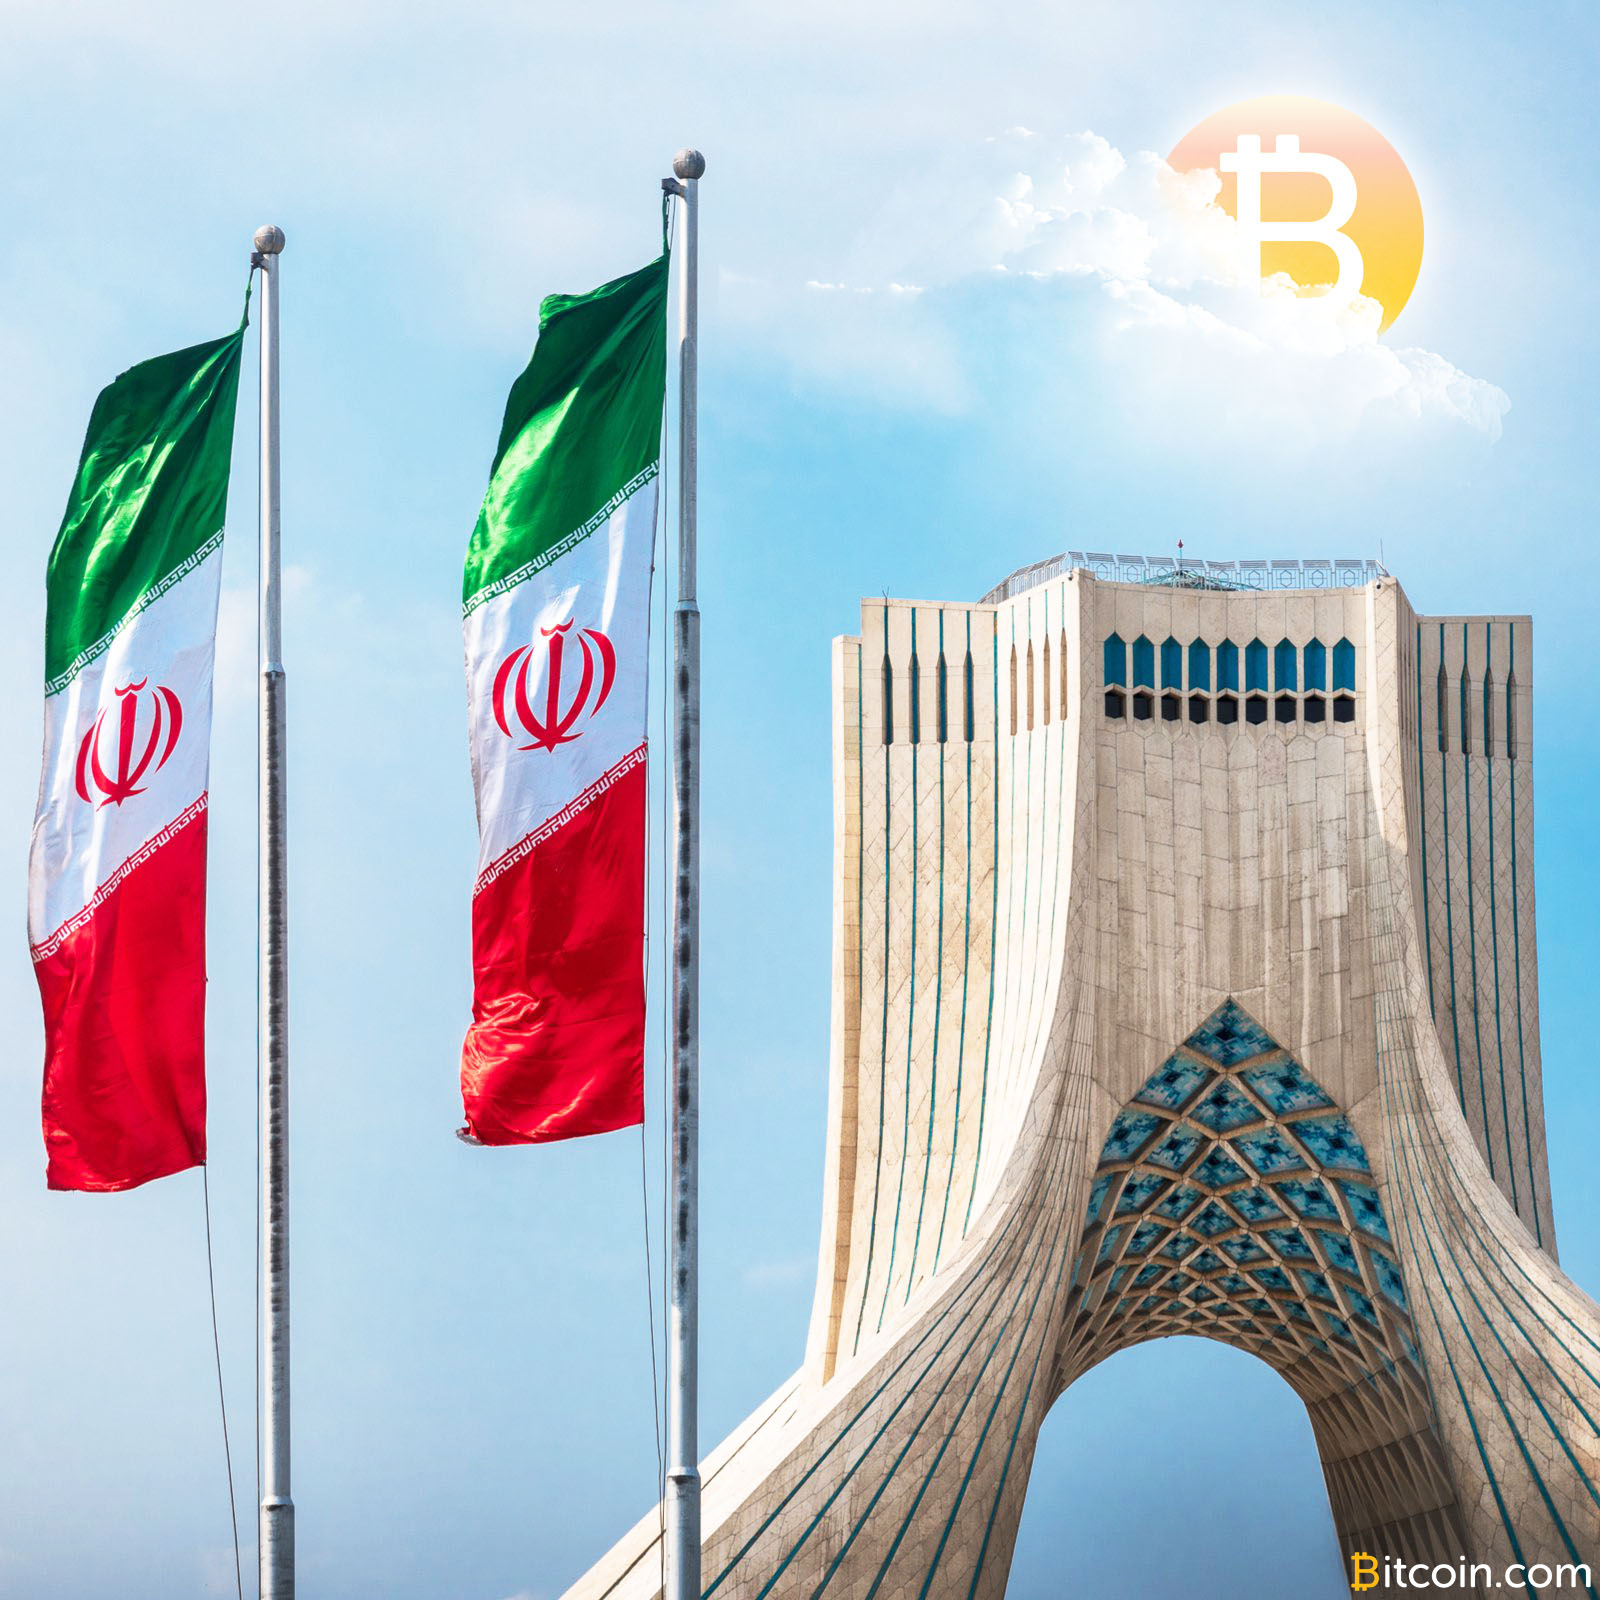 Iranian Computer Hardware Company Accepts Bitcoin